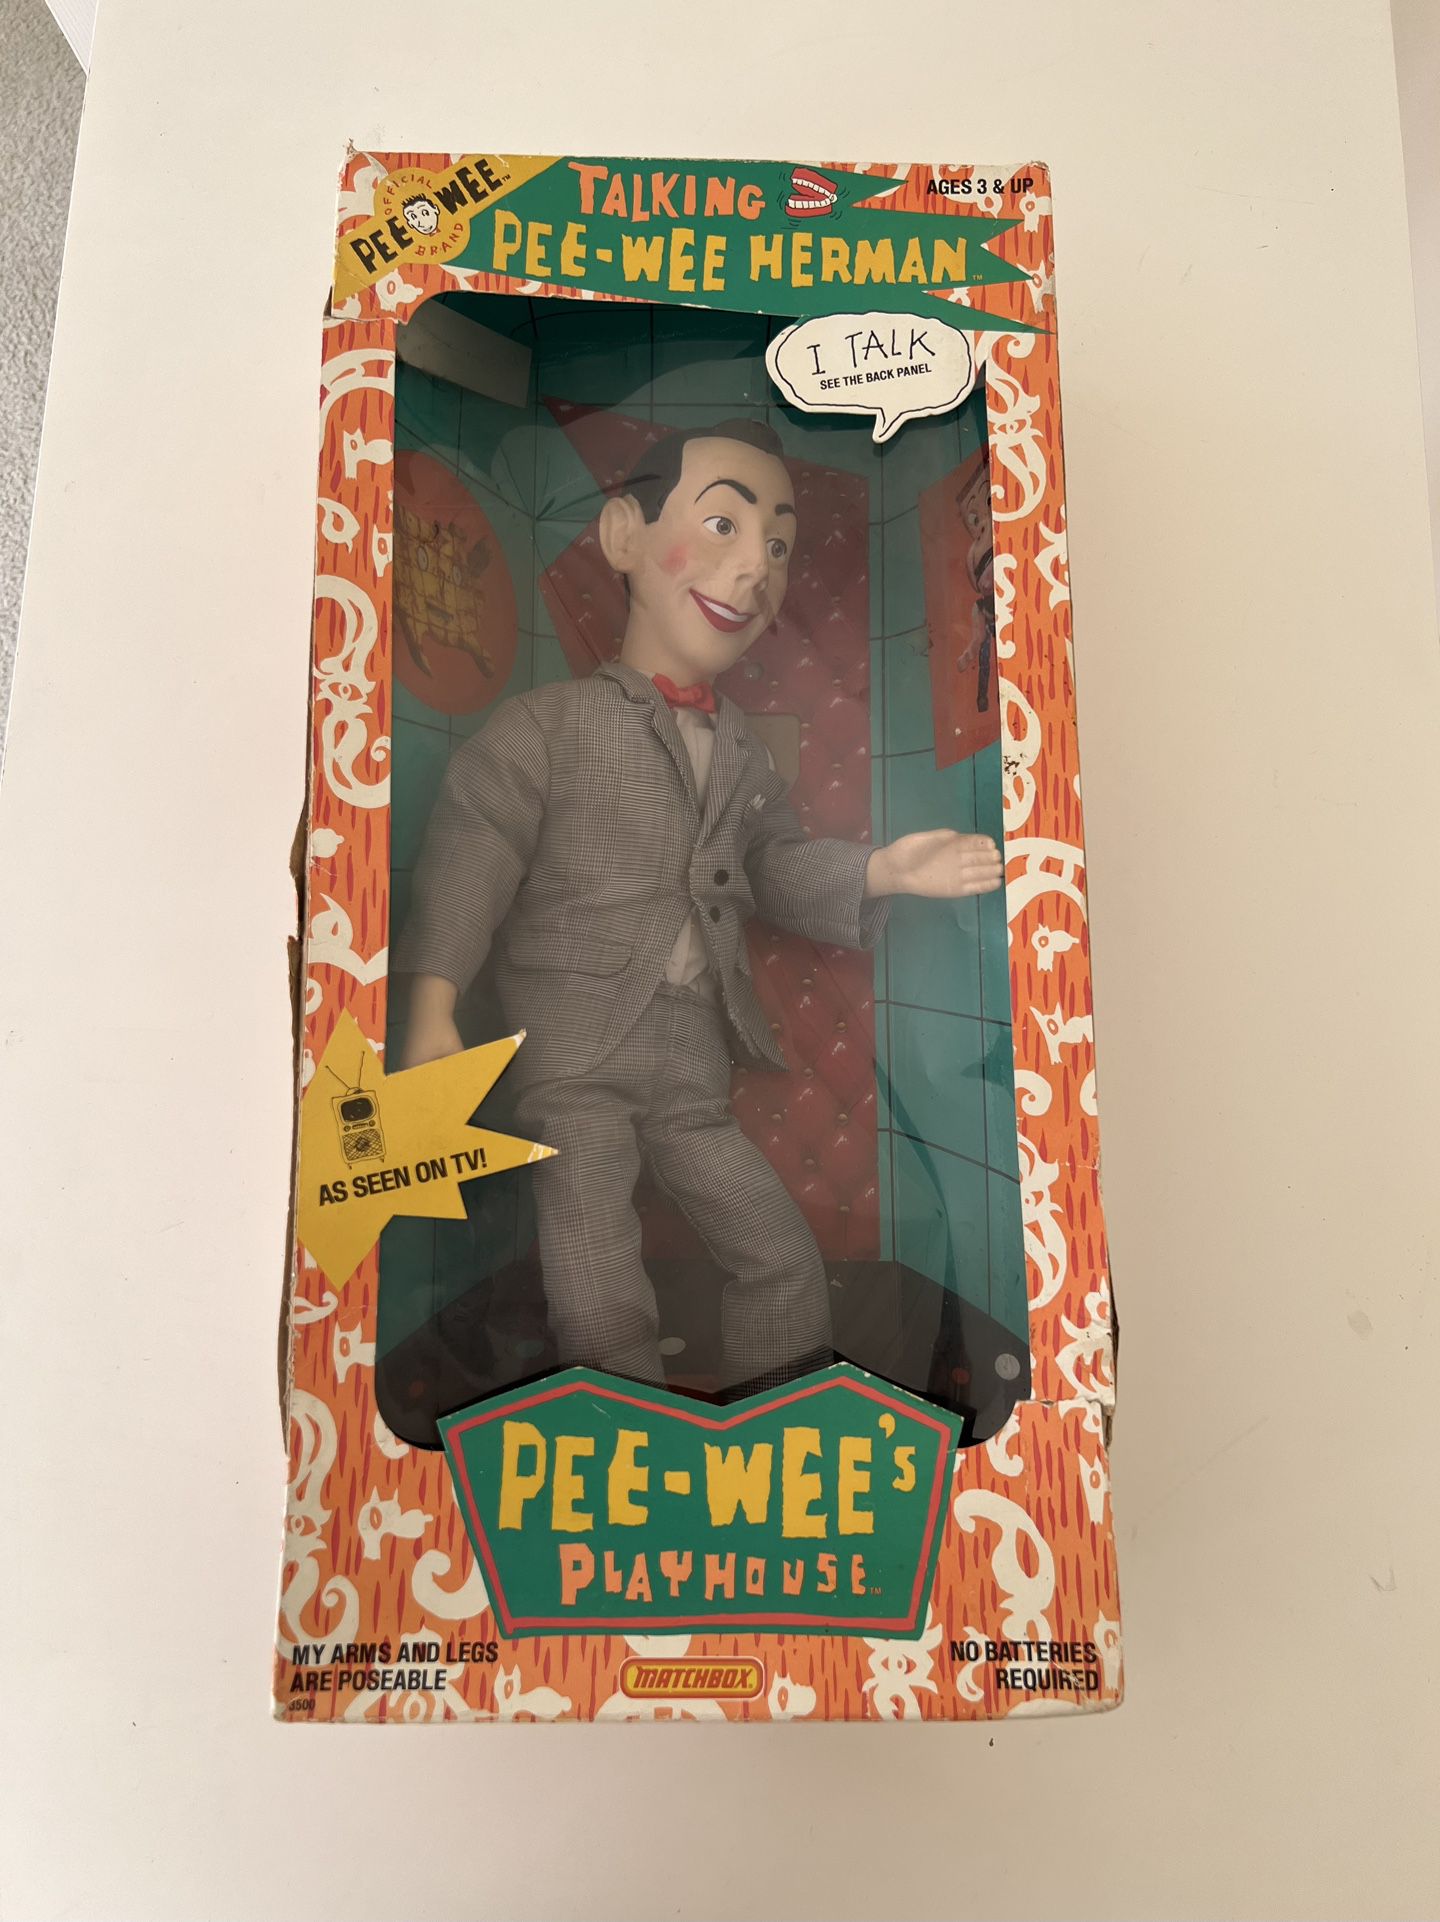 Pee-Wee Herman Pee-Wee's Playhouse doll made by Matchbox.